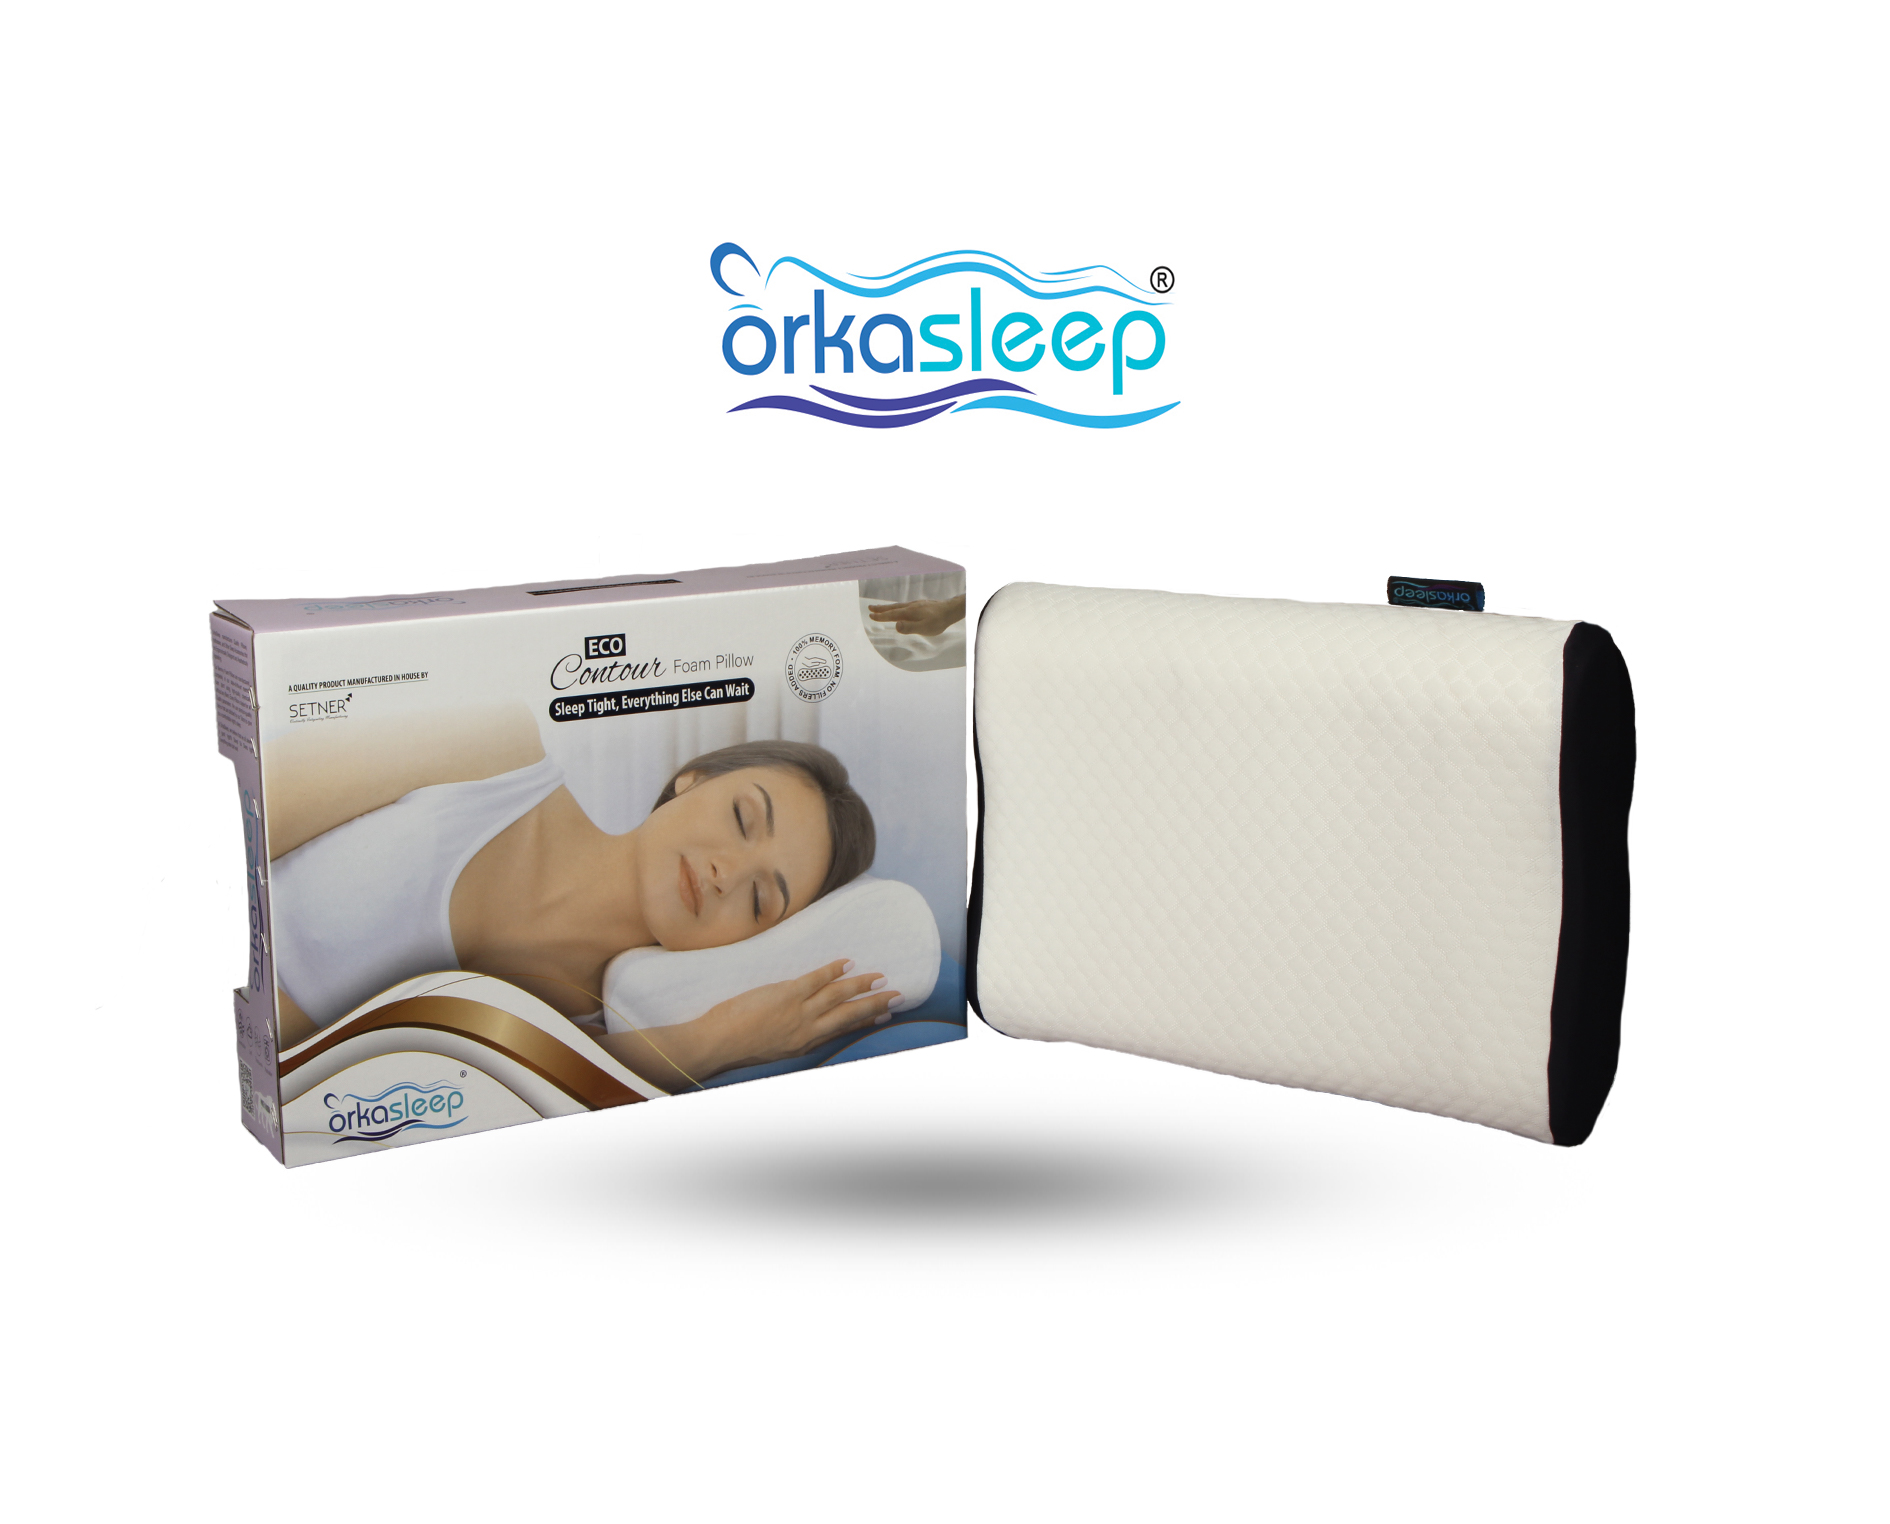 OrkaSleep Memory Foam Pillow - Eco Contour  19x12x4 Inches